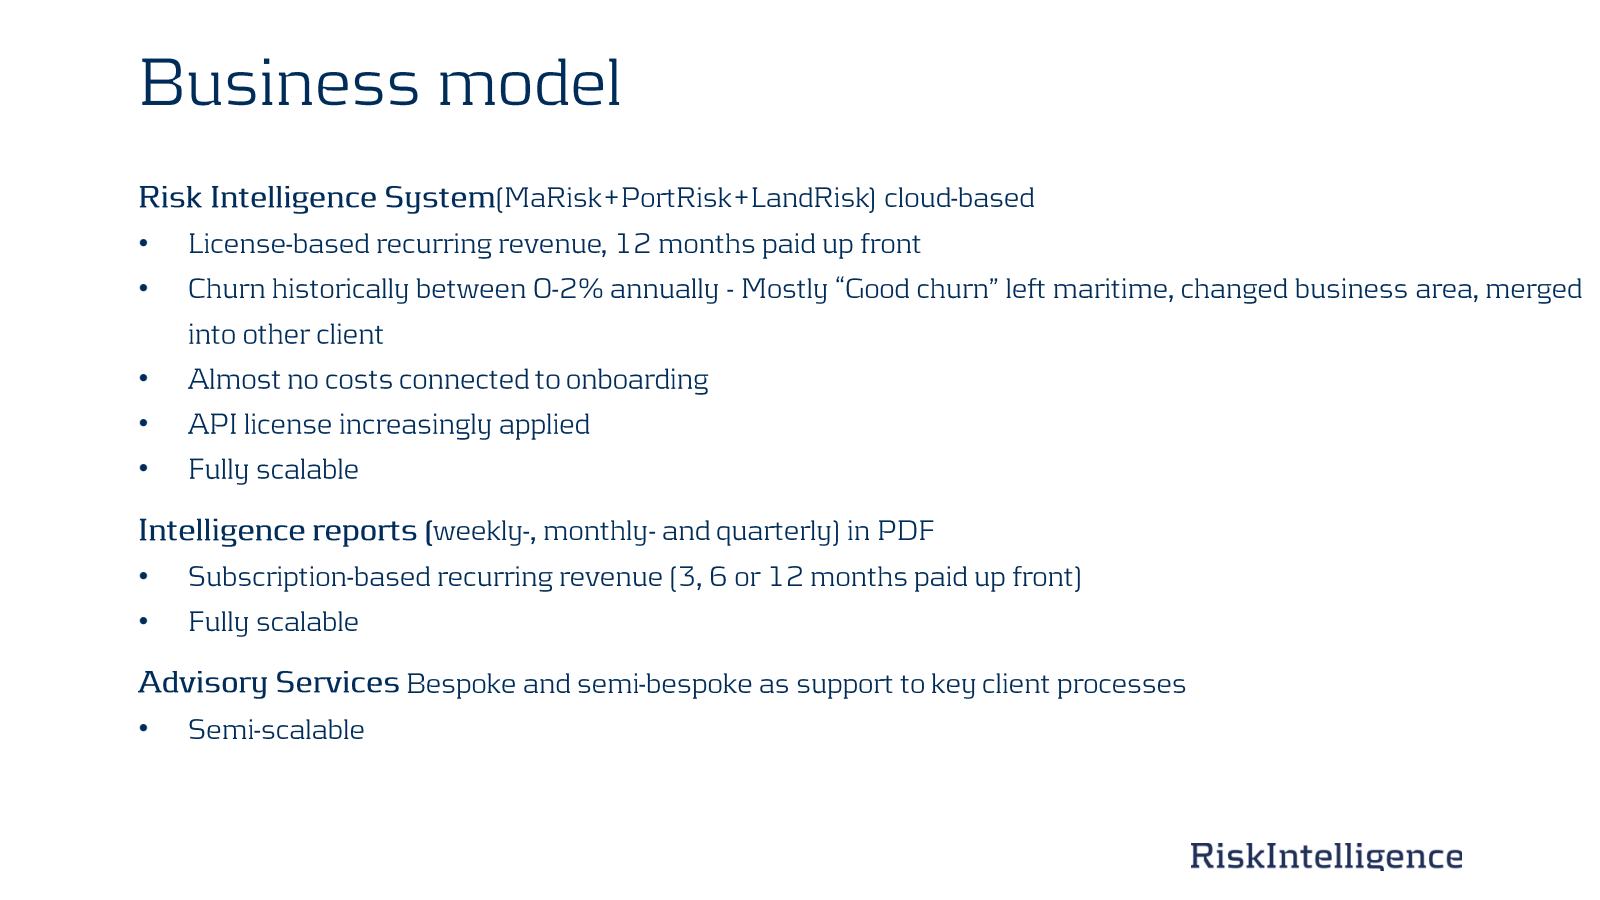 Business model 

Ris